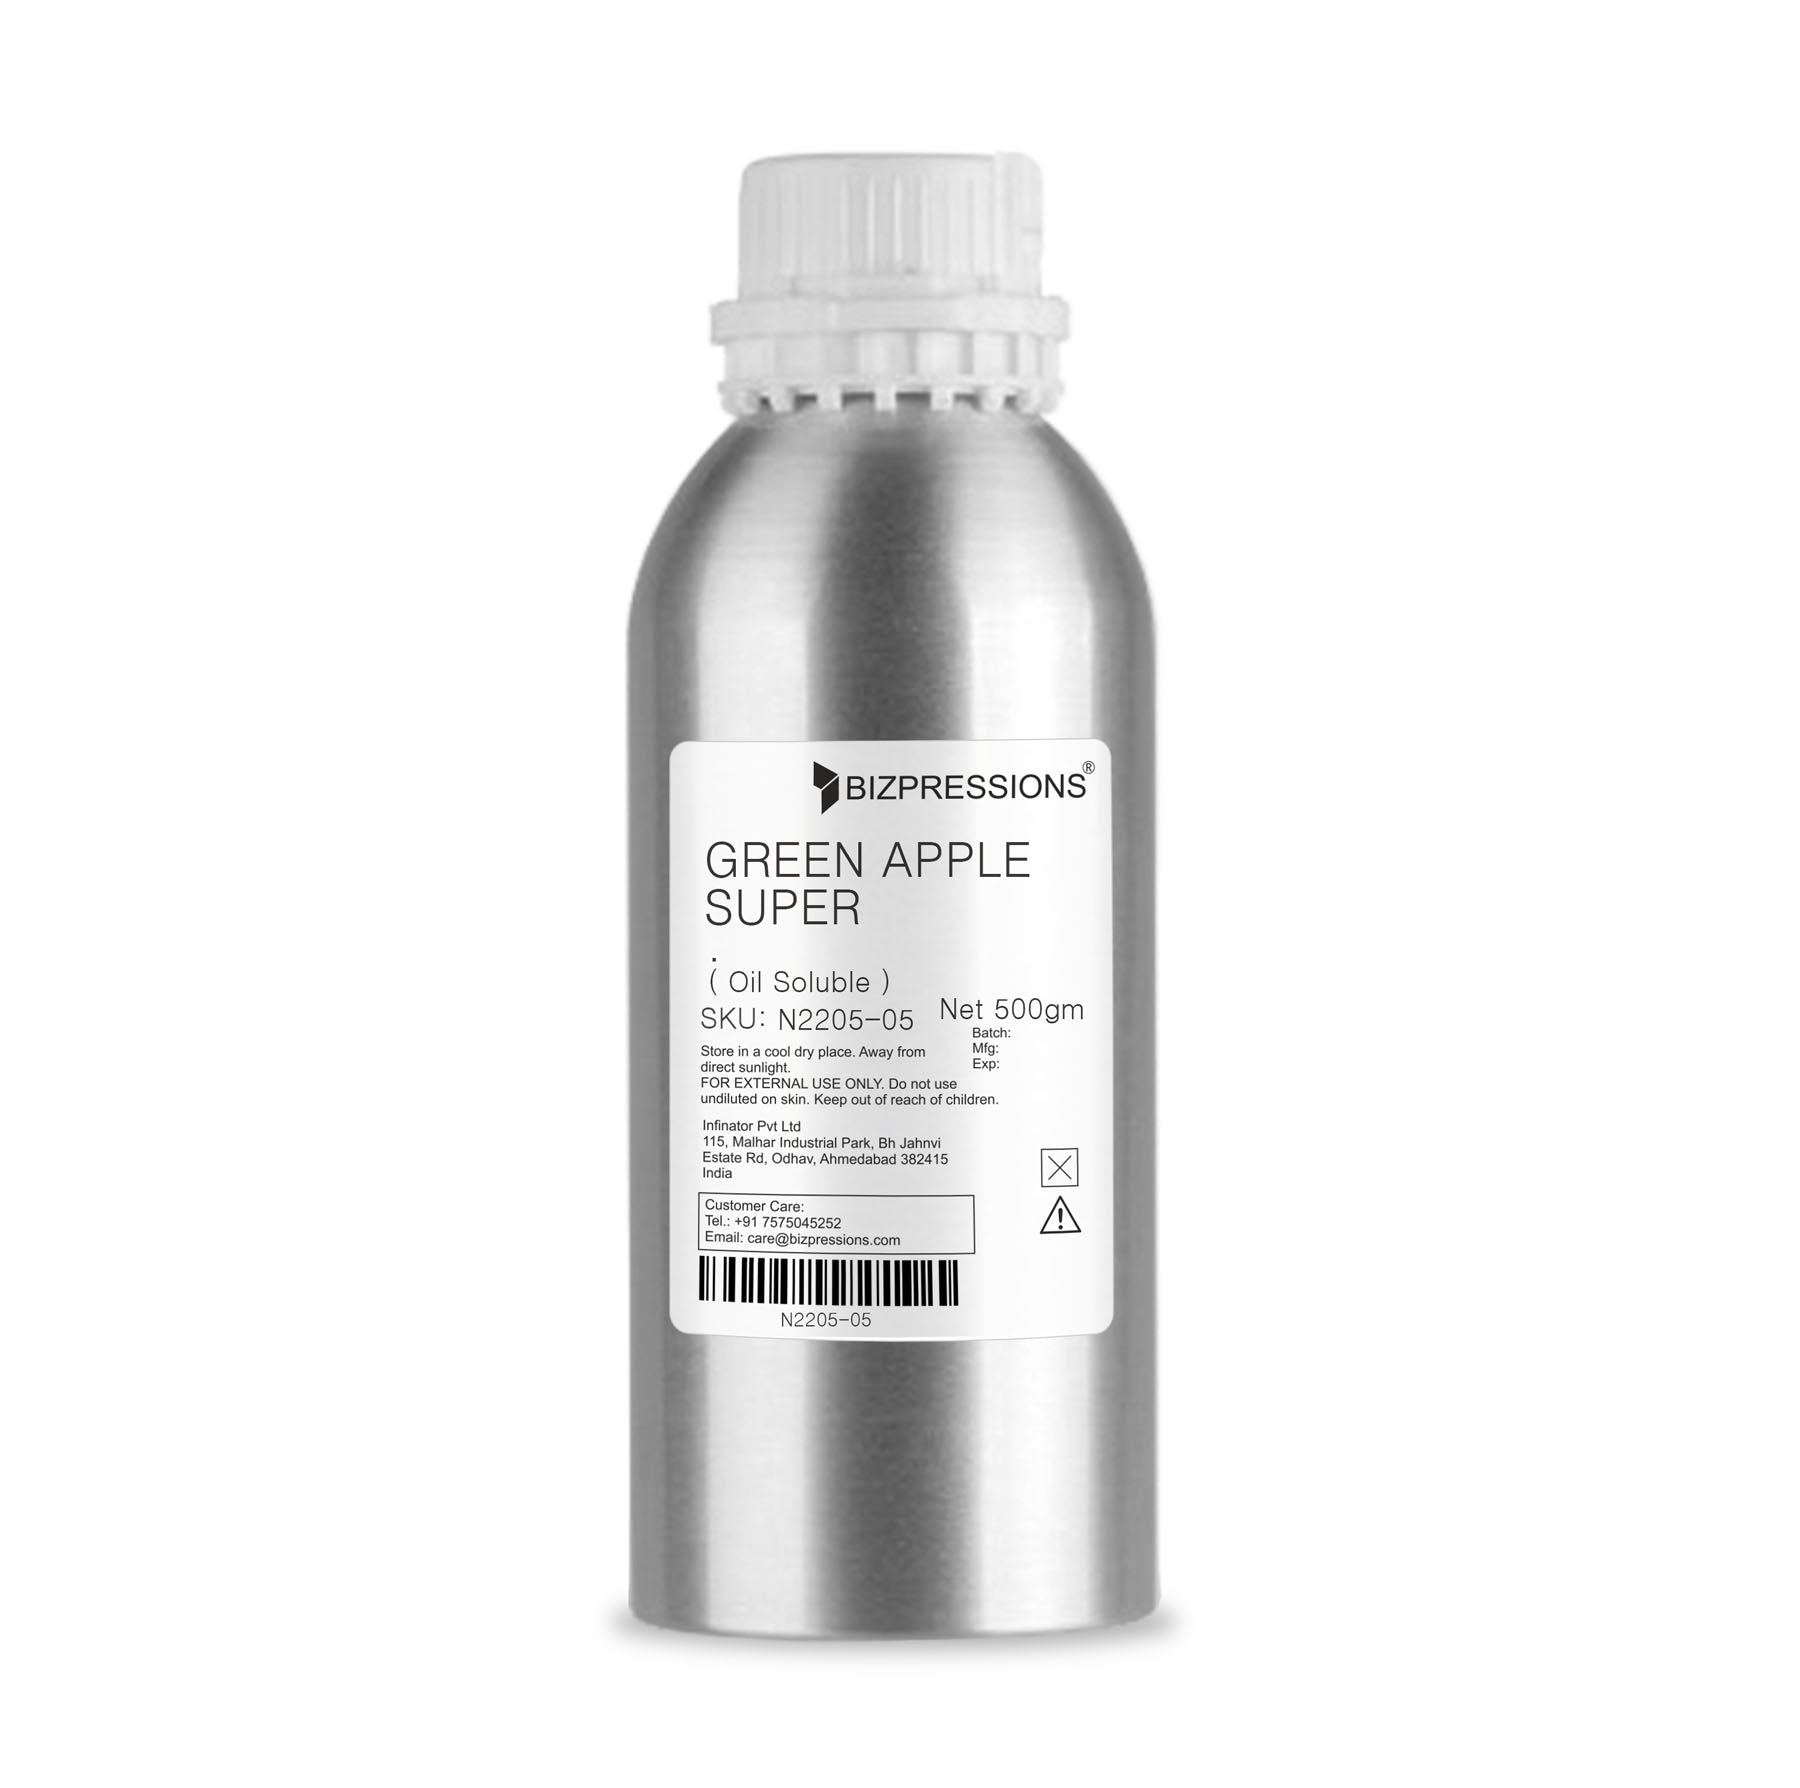 GREEN APPLE SUPER - Fragrance ( Oil Soluble ) - 500 gm